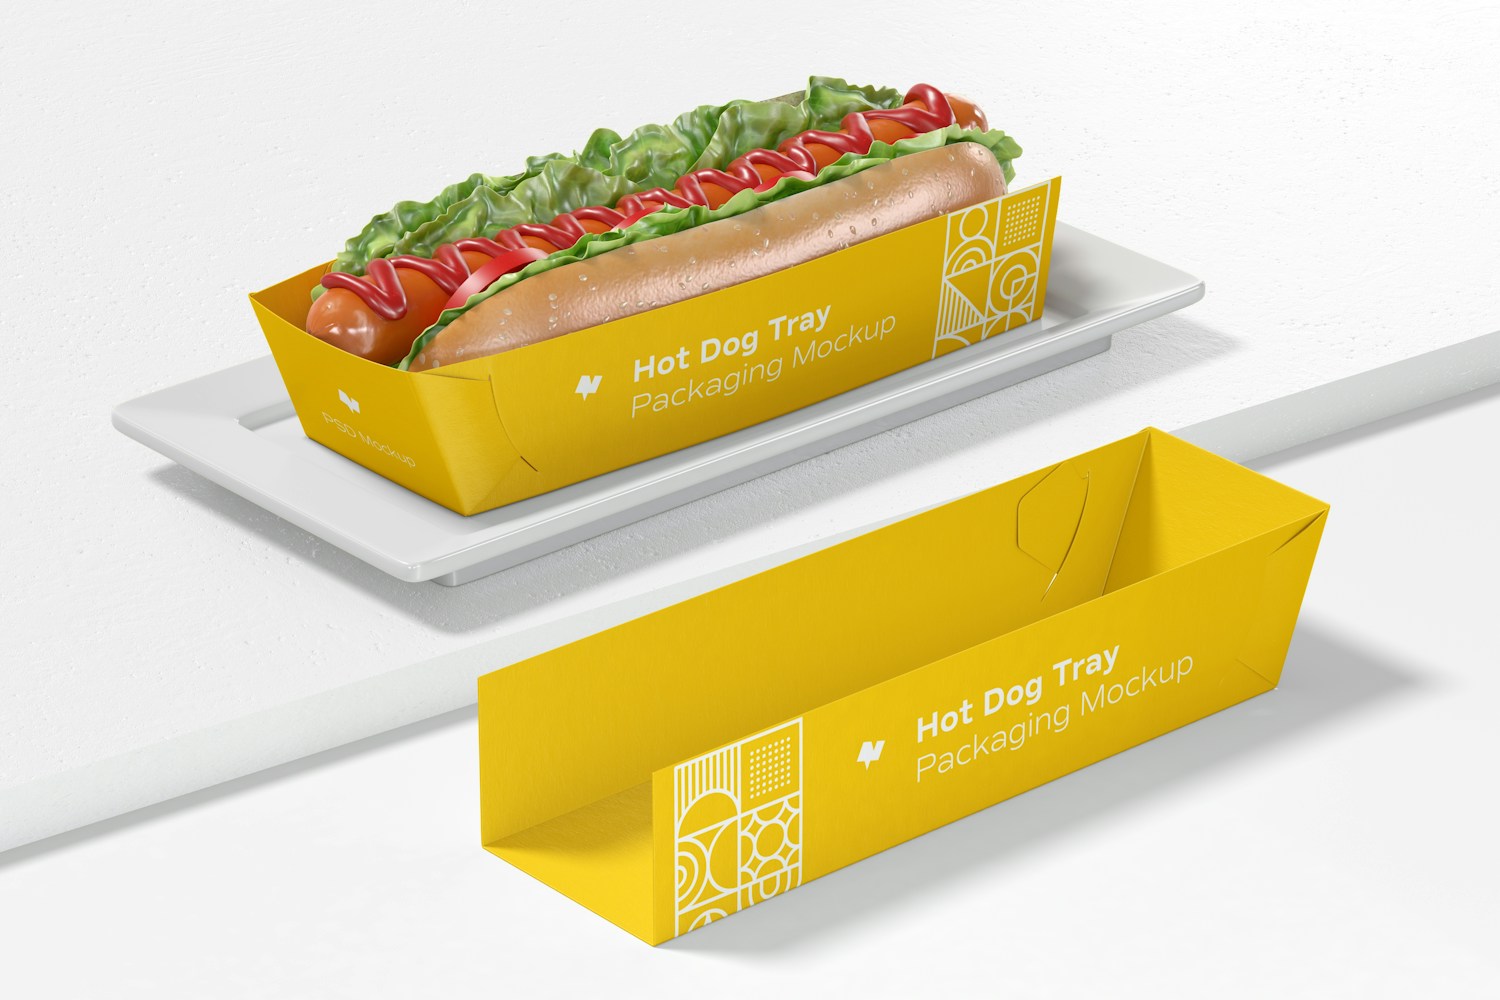 Hot Dog Tray Packaging Mockup, Perspective